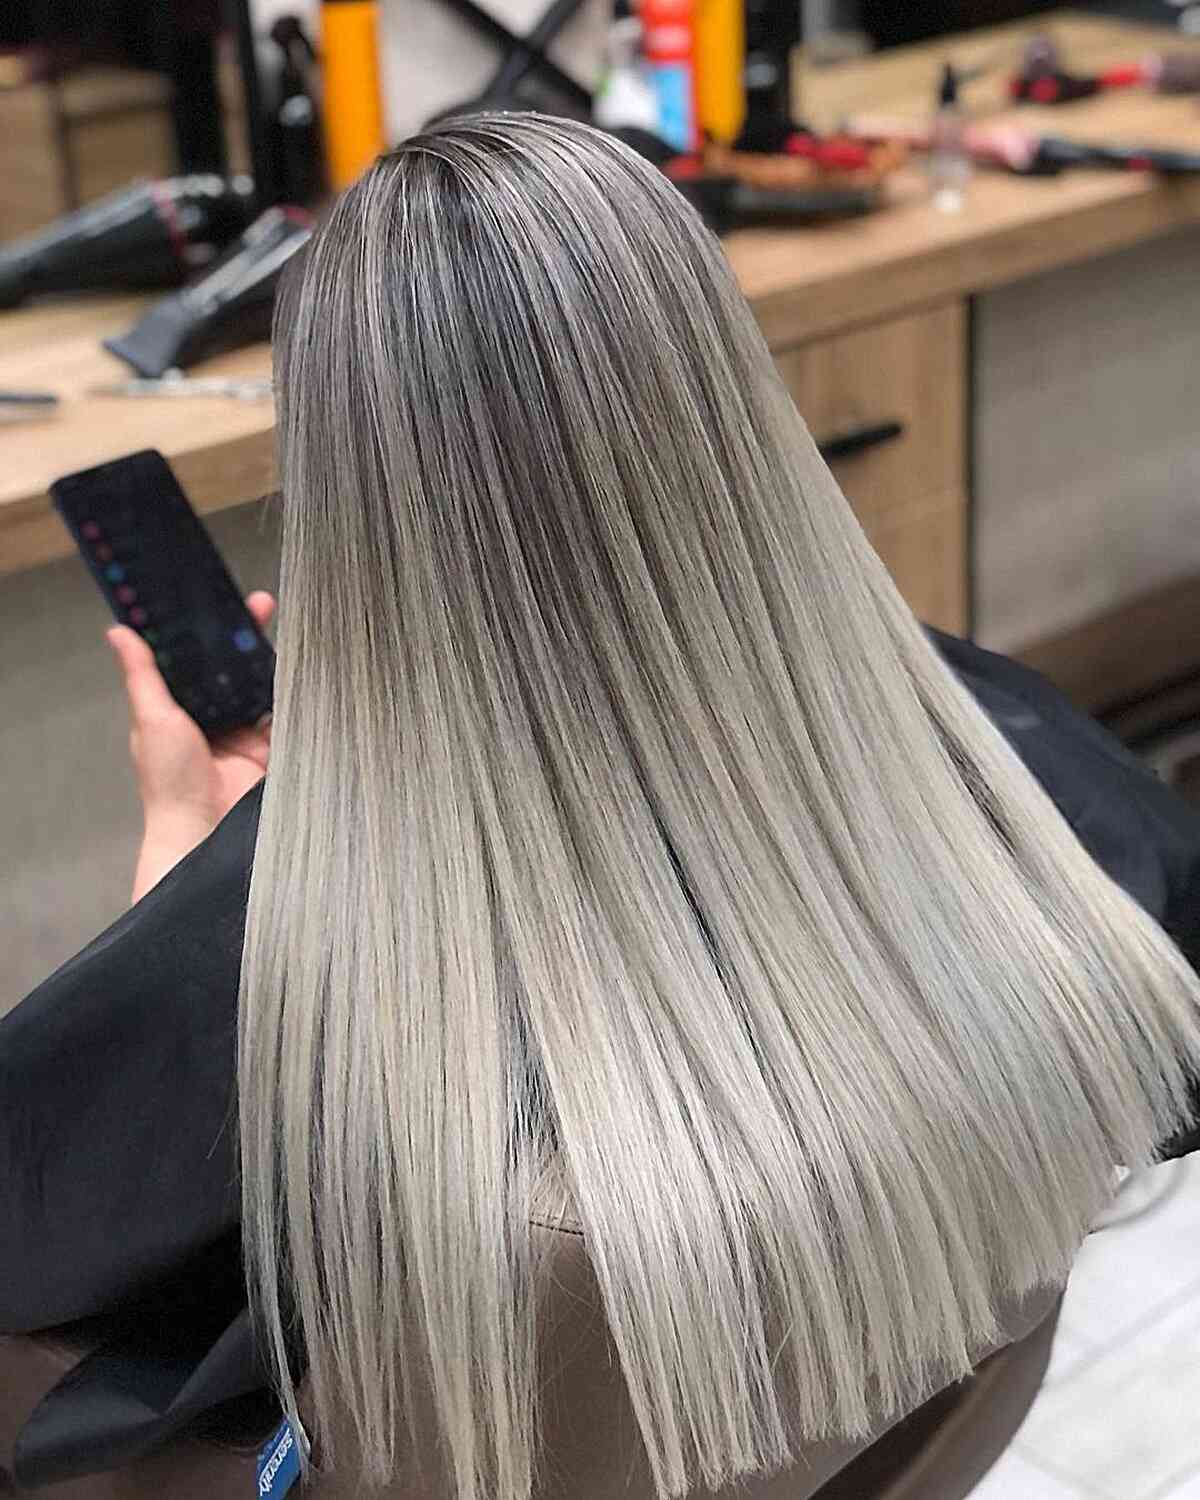 Sleek Long Platinum Blonde Balayage Hair with Blunt Ends